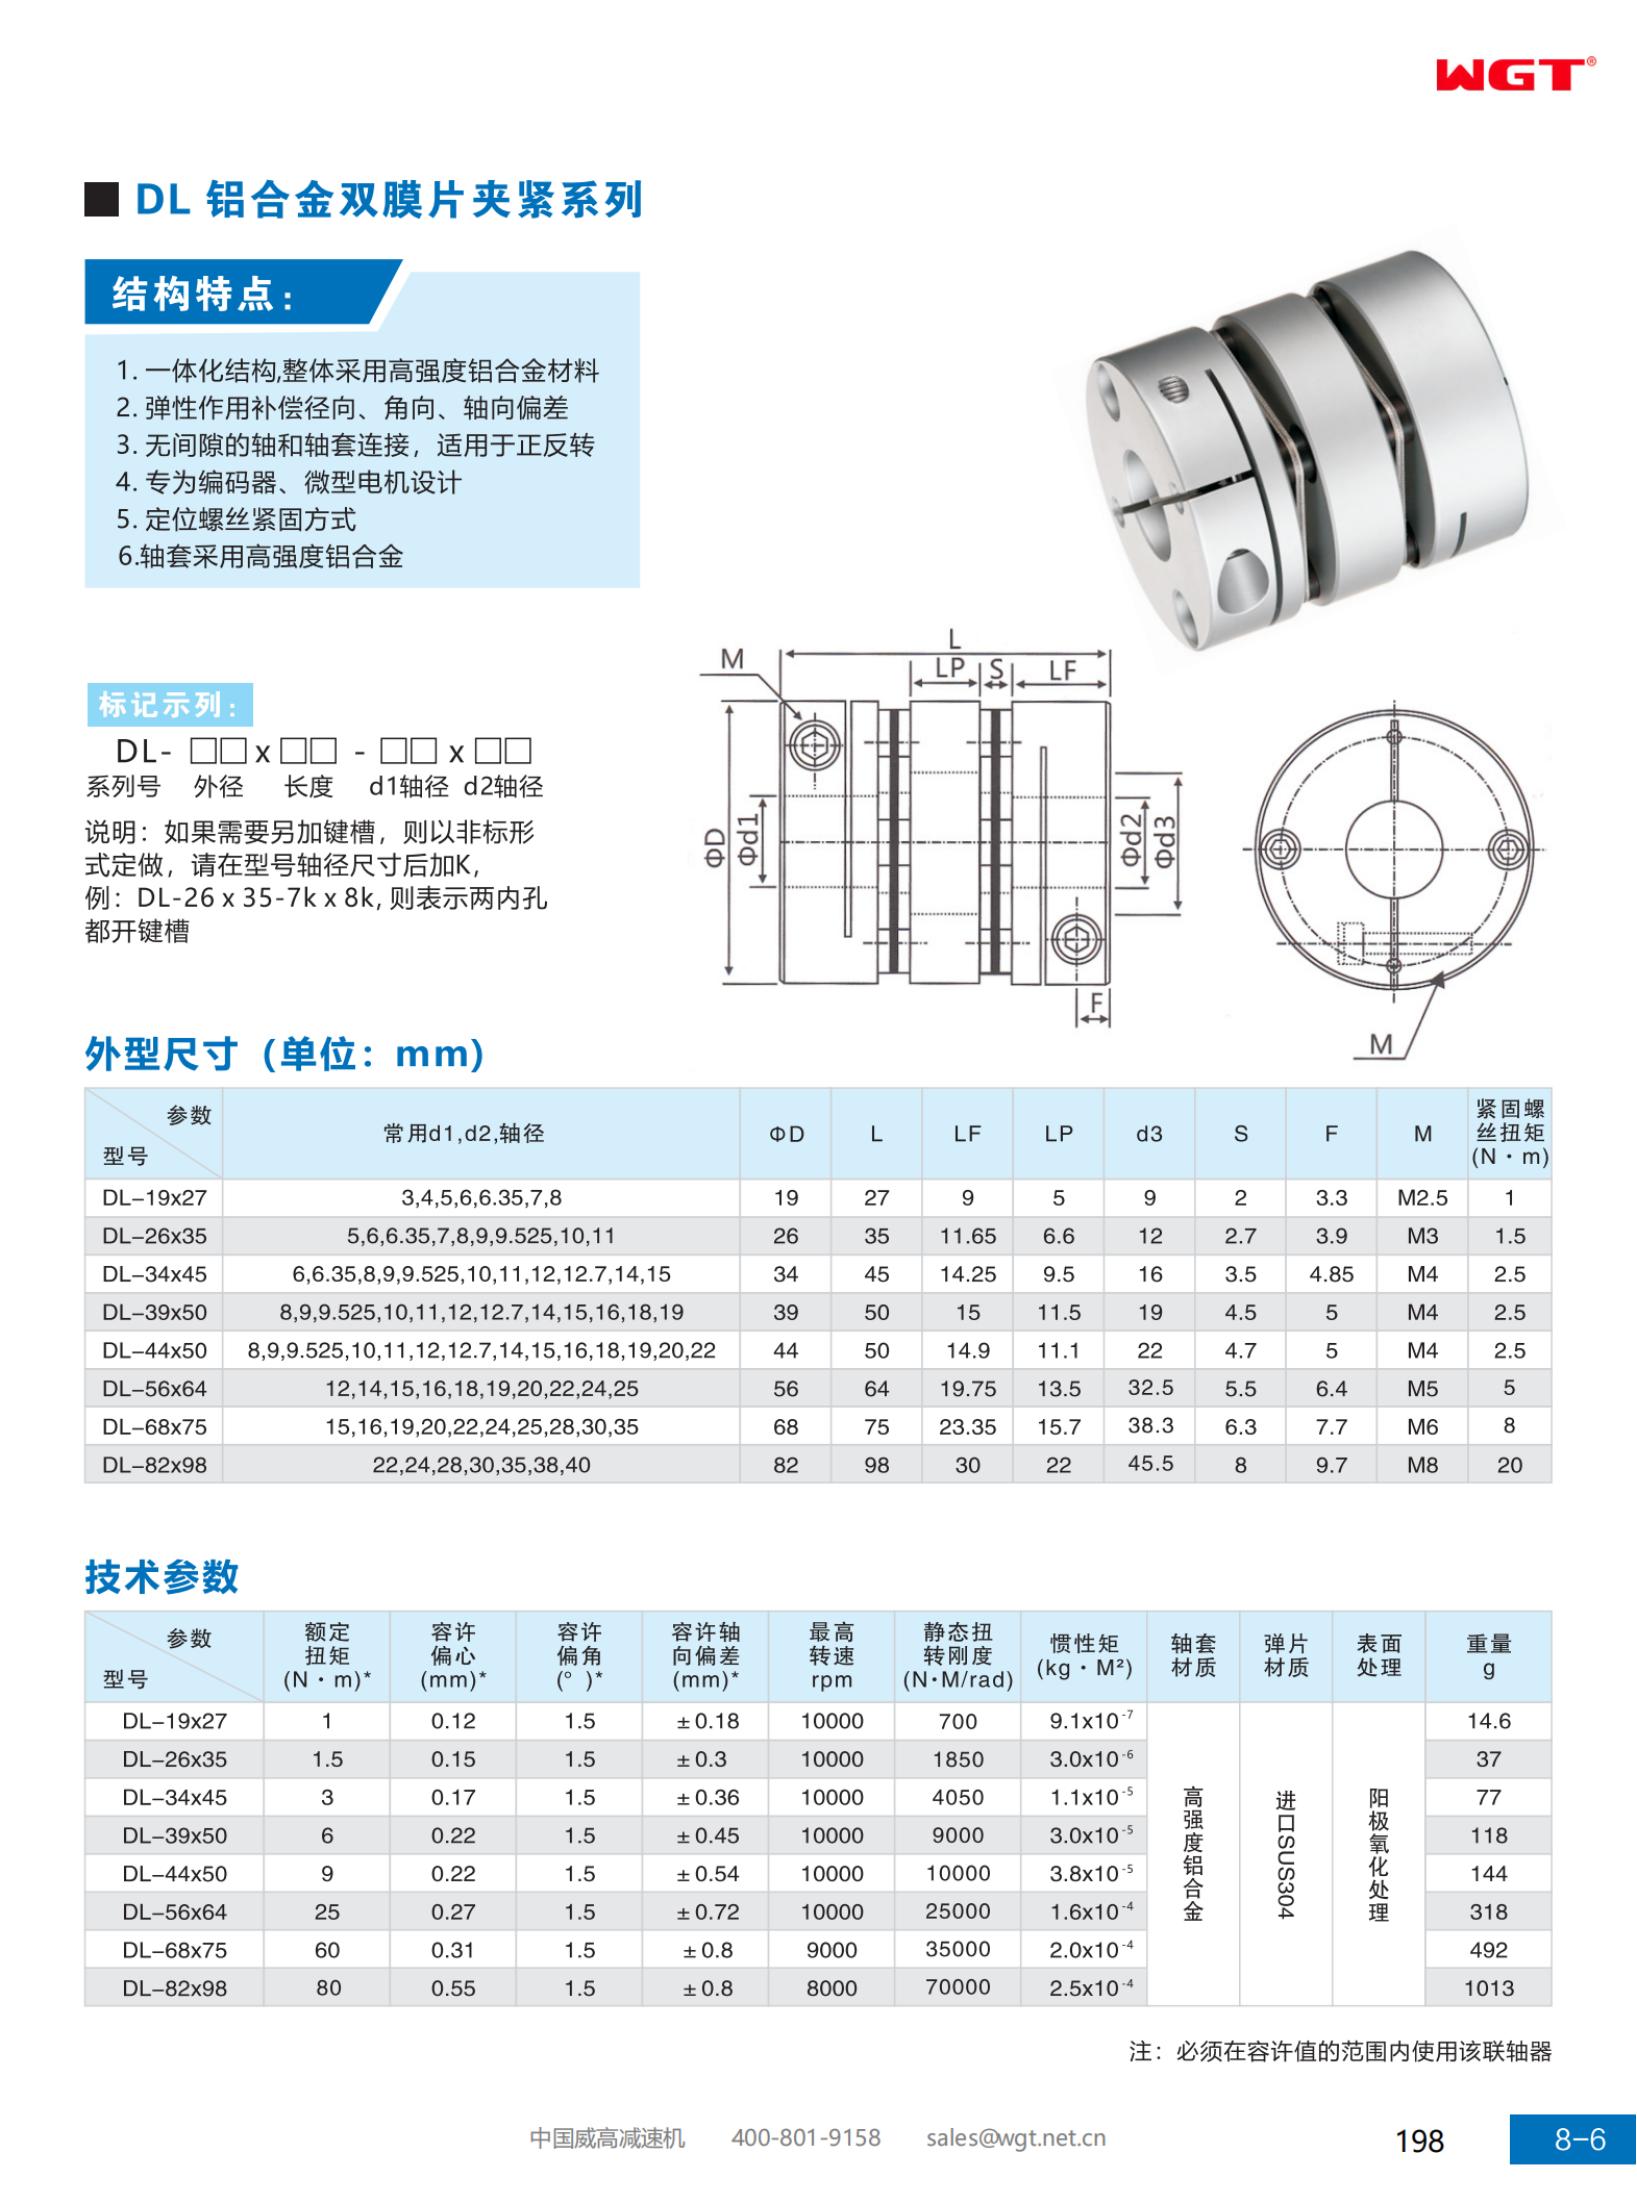 DL aluminum alloy double diaphragm clamping series